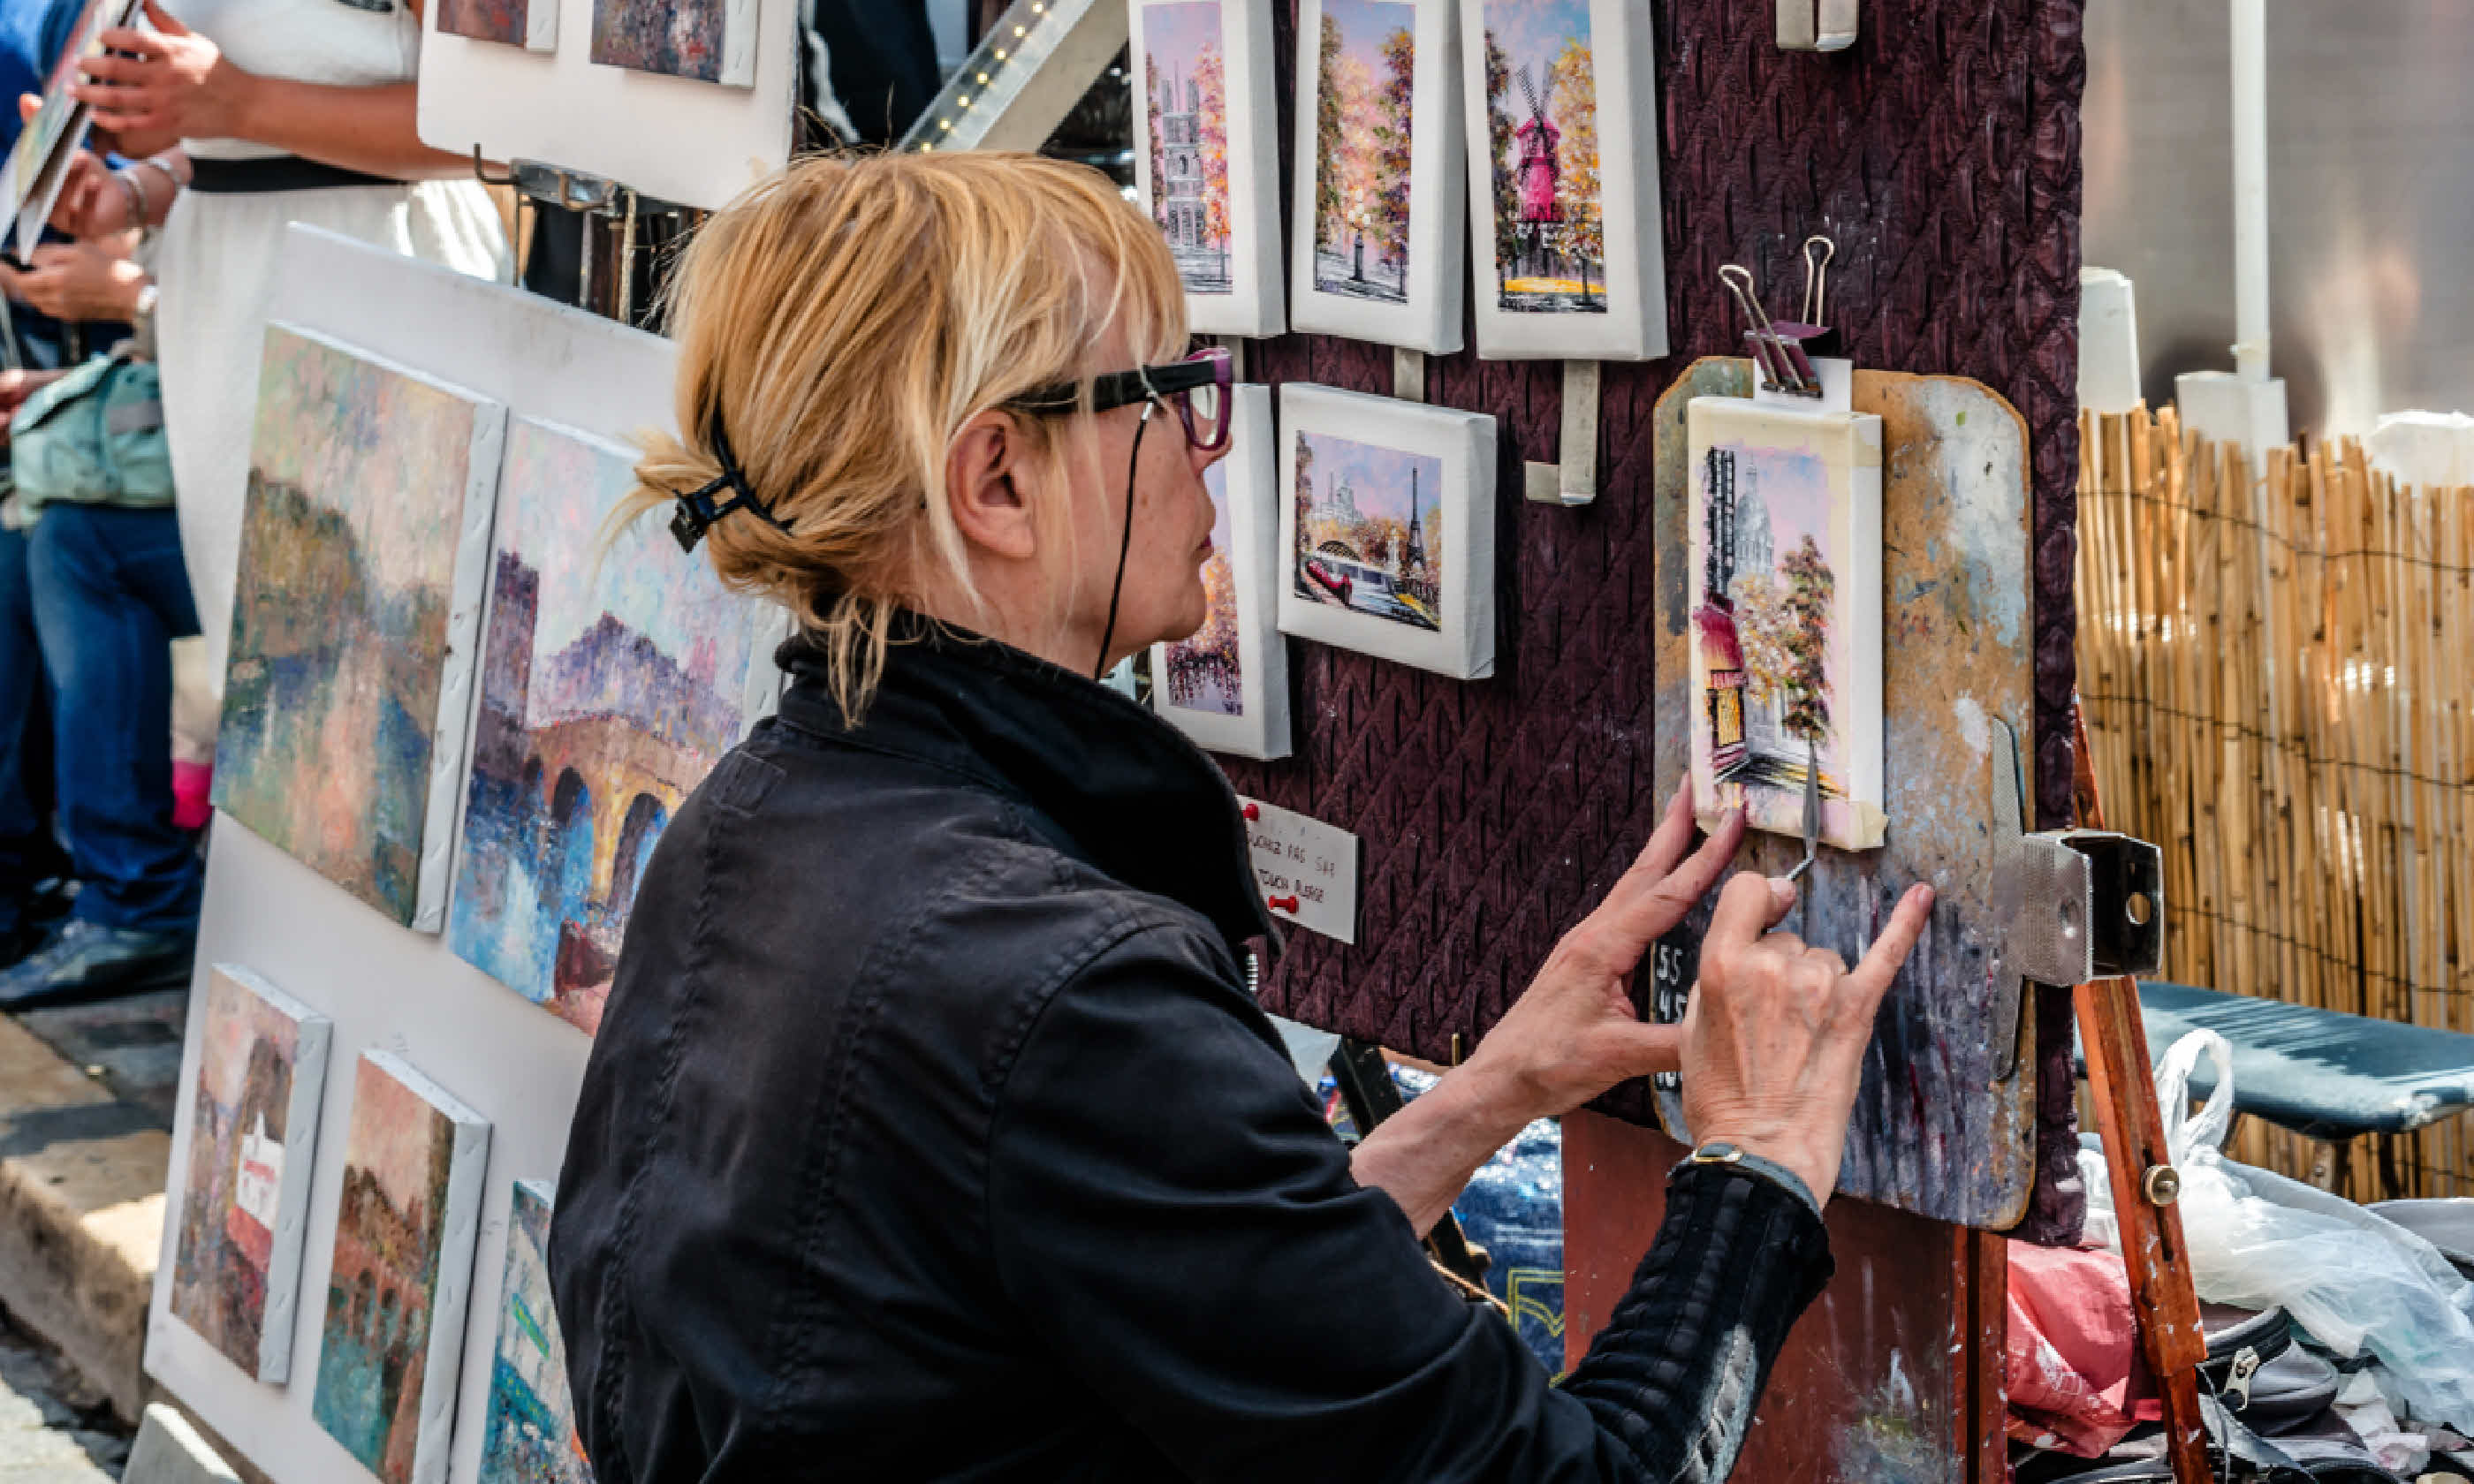 Artist in Montmartre (Shutterstock)